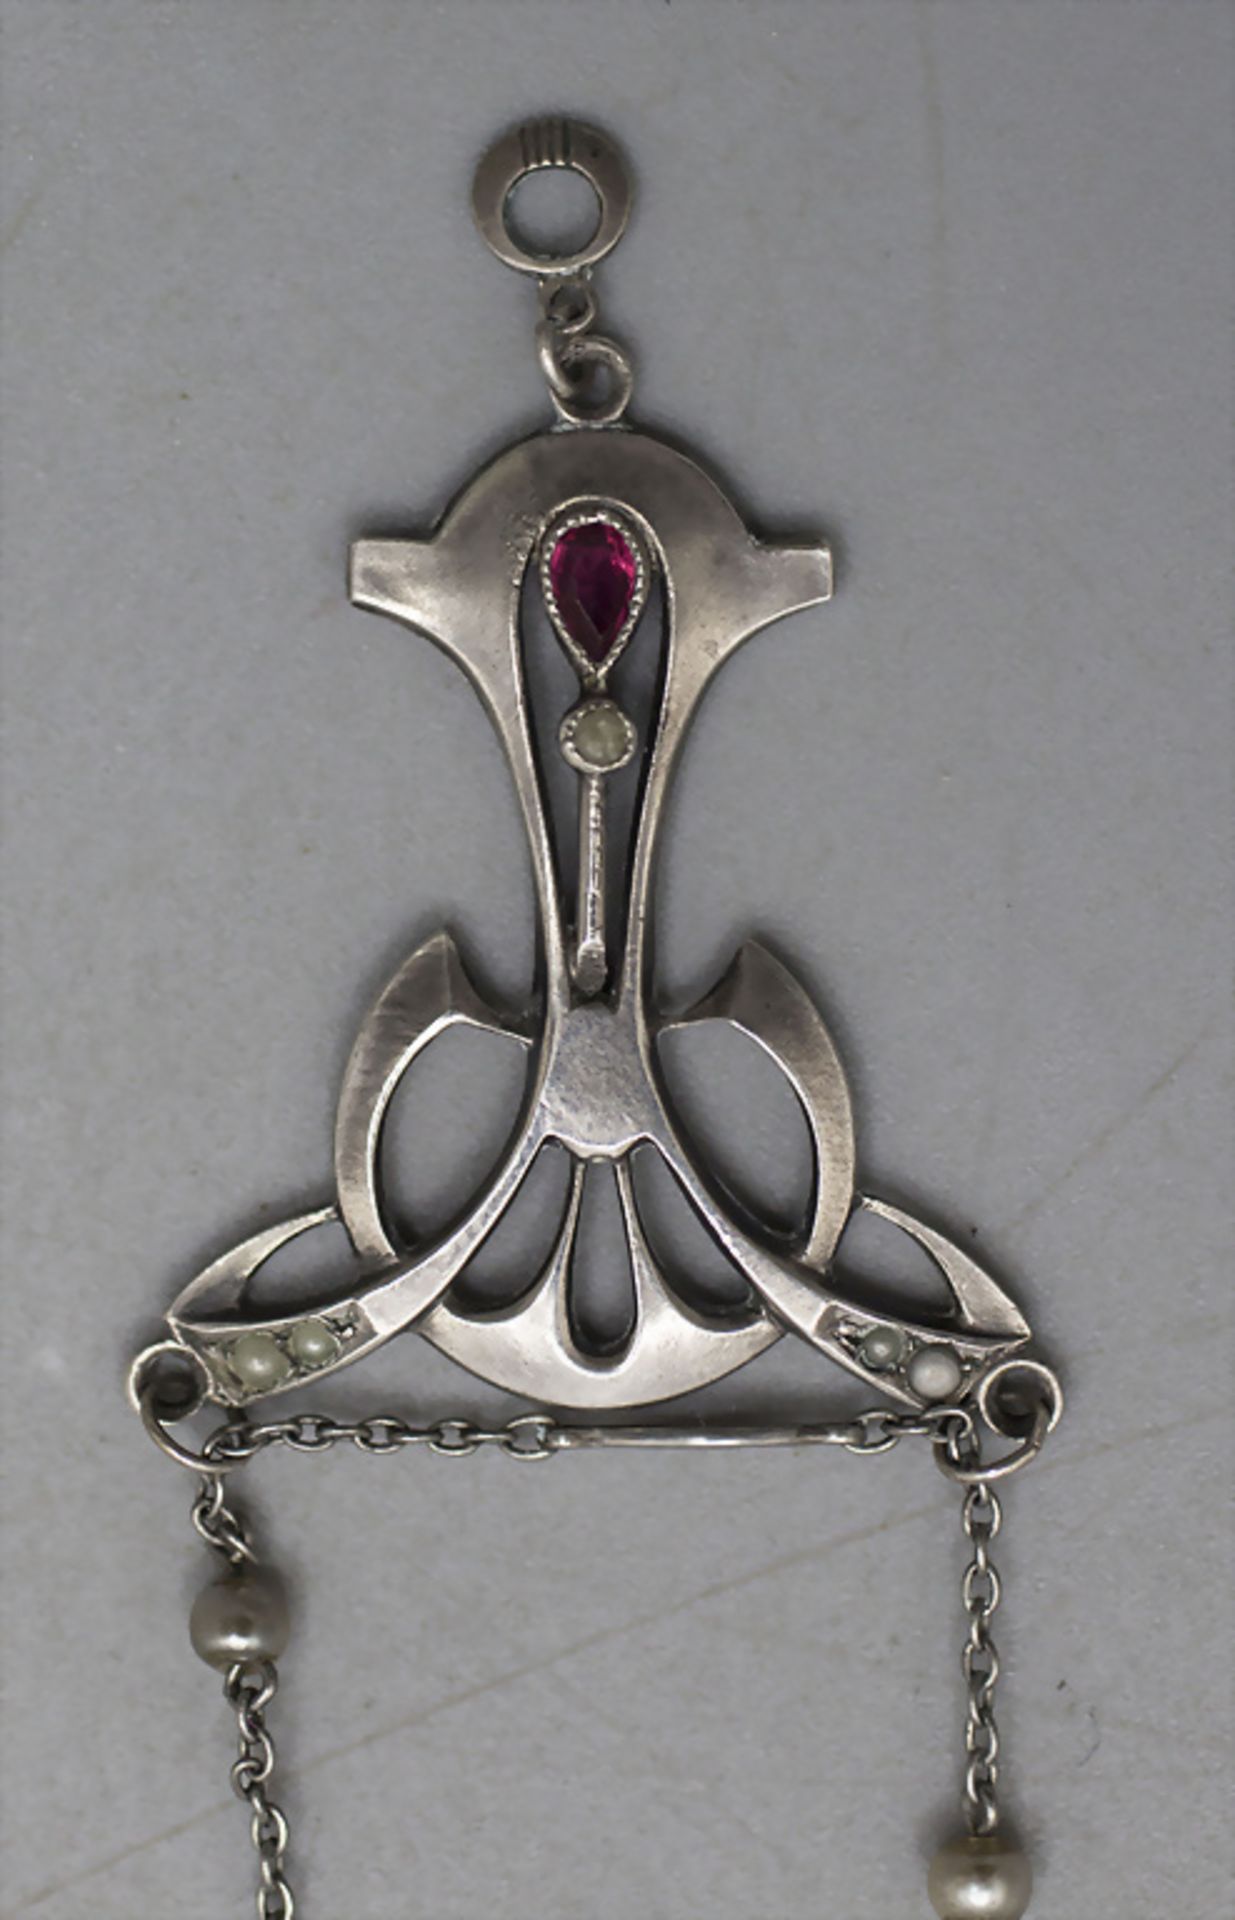 Jugendstil Collier mit Amethyst / An Art Nouveau silver necklace with pendant, deutsch um 1900 - Image 2 of 3